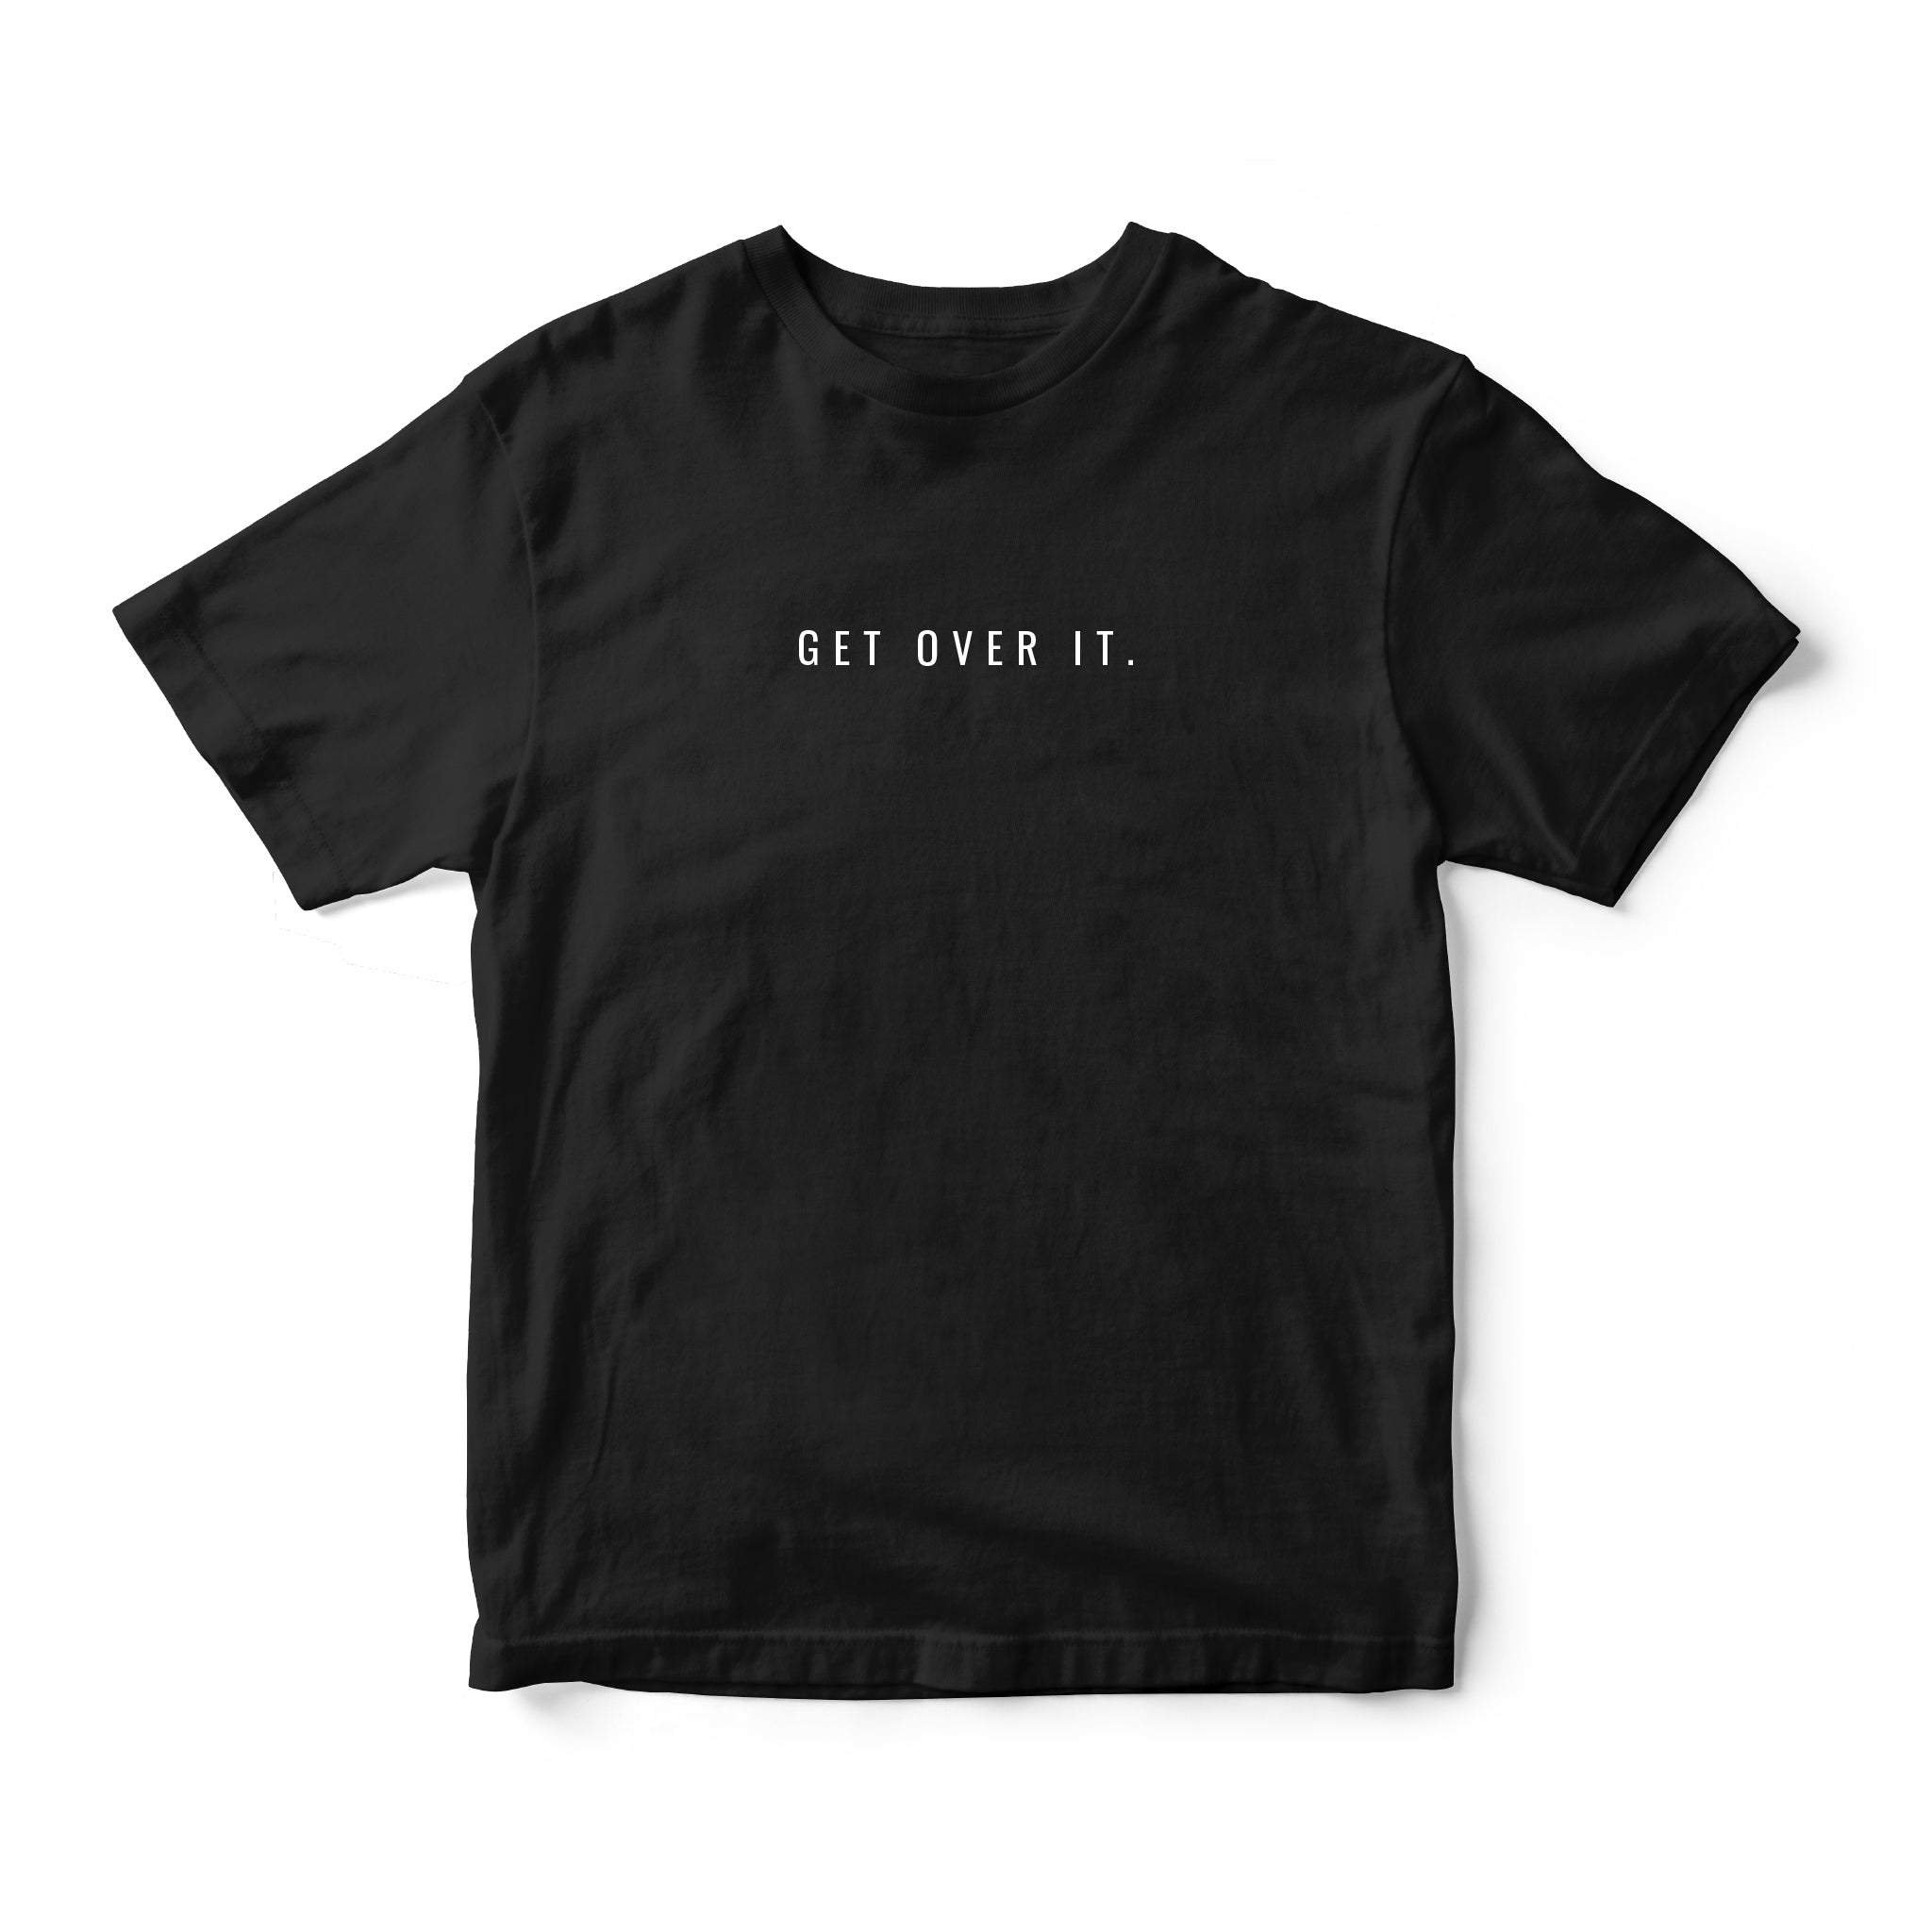 Instee Get Over It T-shirt Unisex 100% Cotton